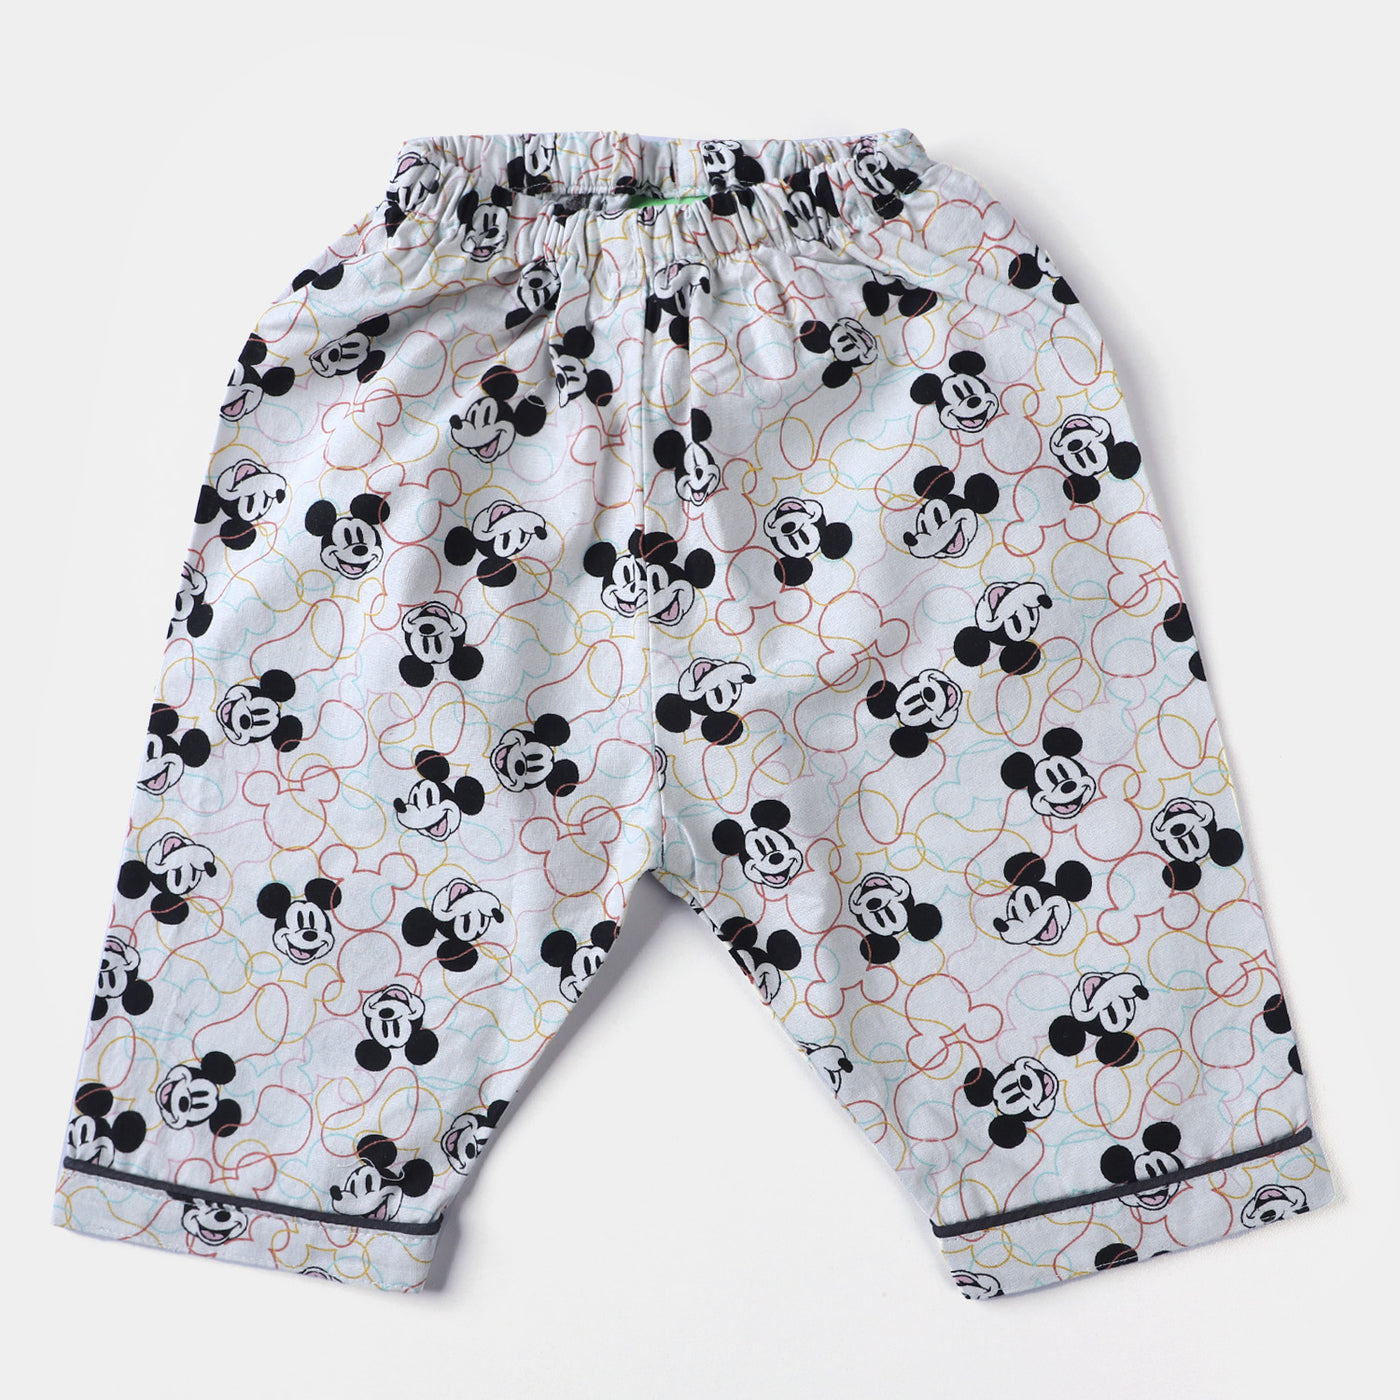 Infant Boys Cotton Woven Nightwear Suit Mickey-White